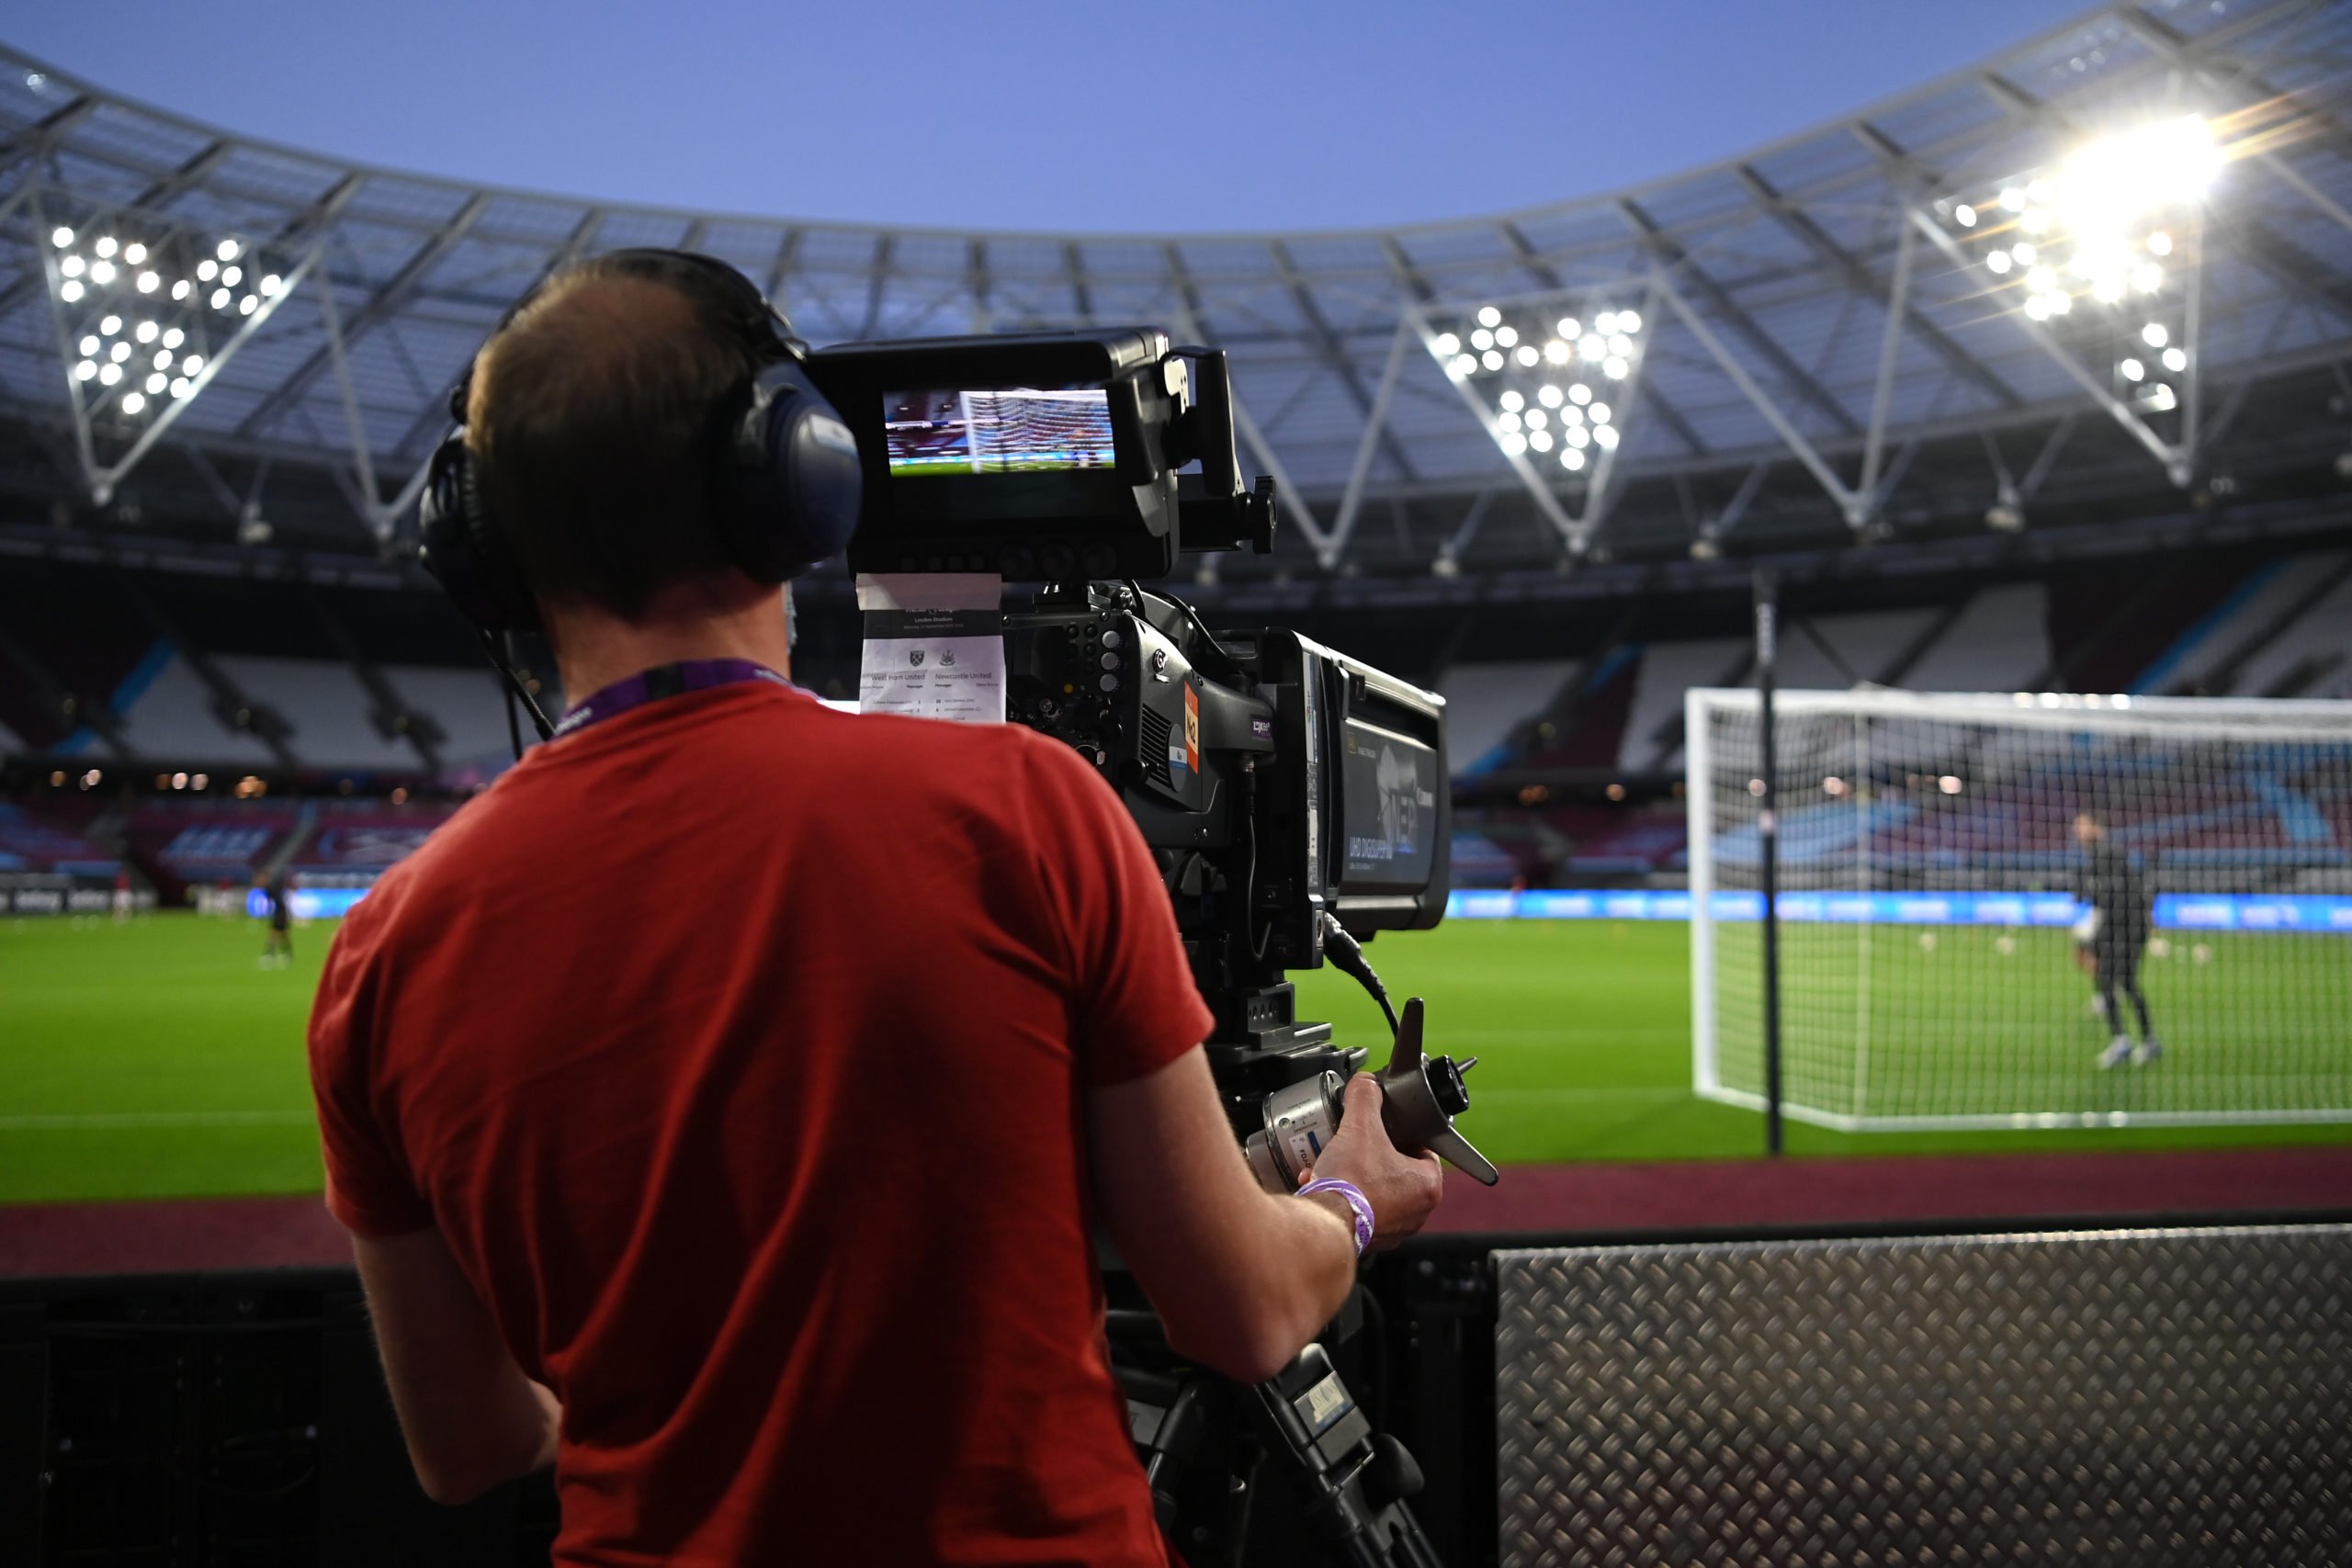 West Ham get £500m boost as landmark new overseas TV deal is confirmed taking rights earnings past £10bn mark